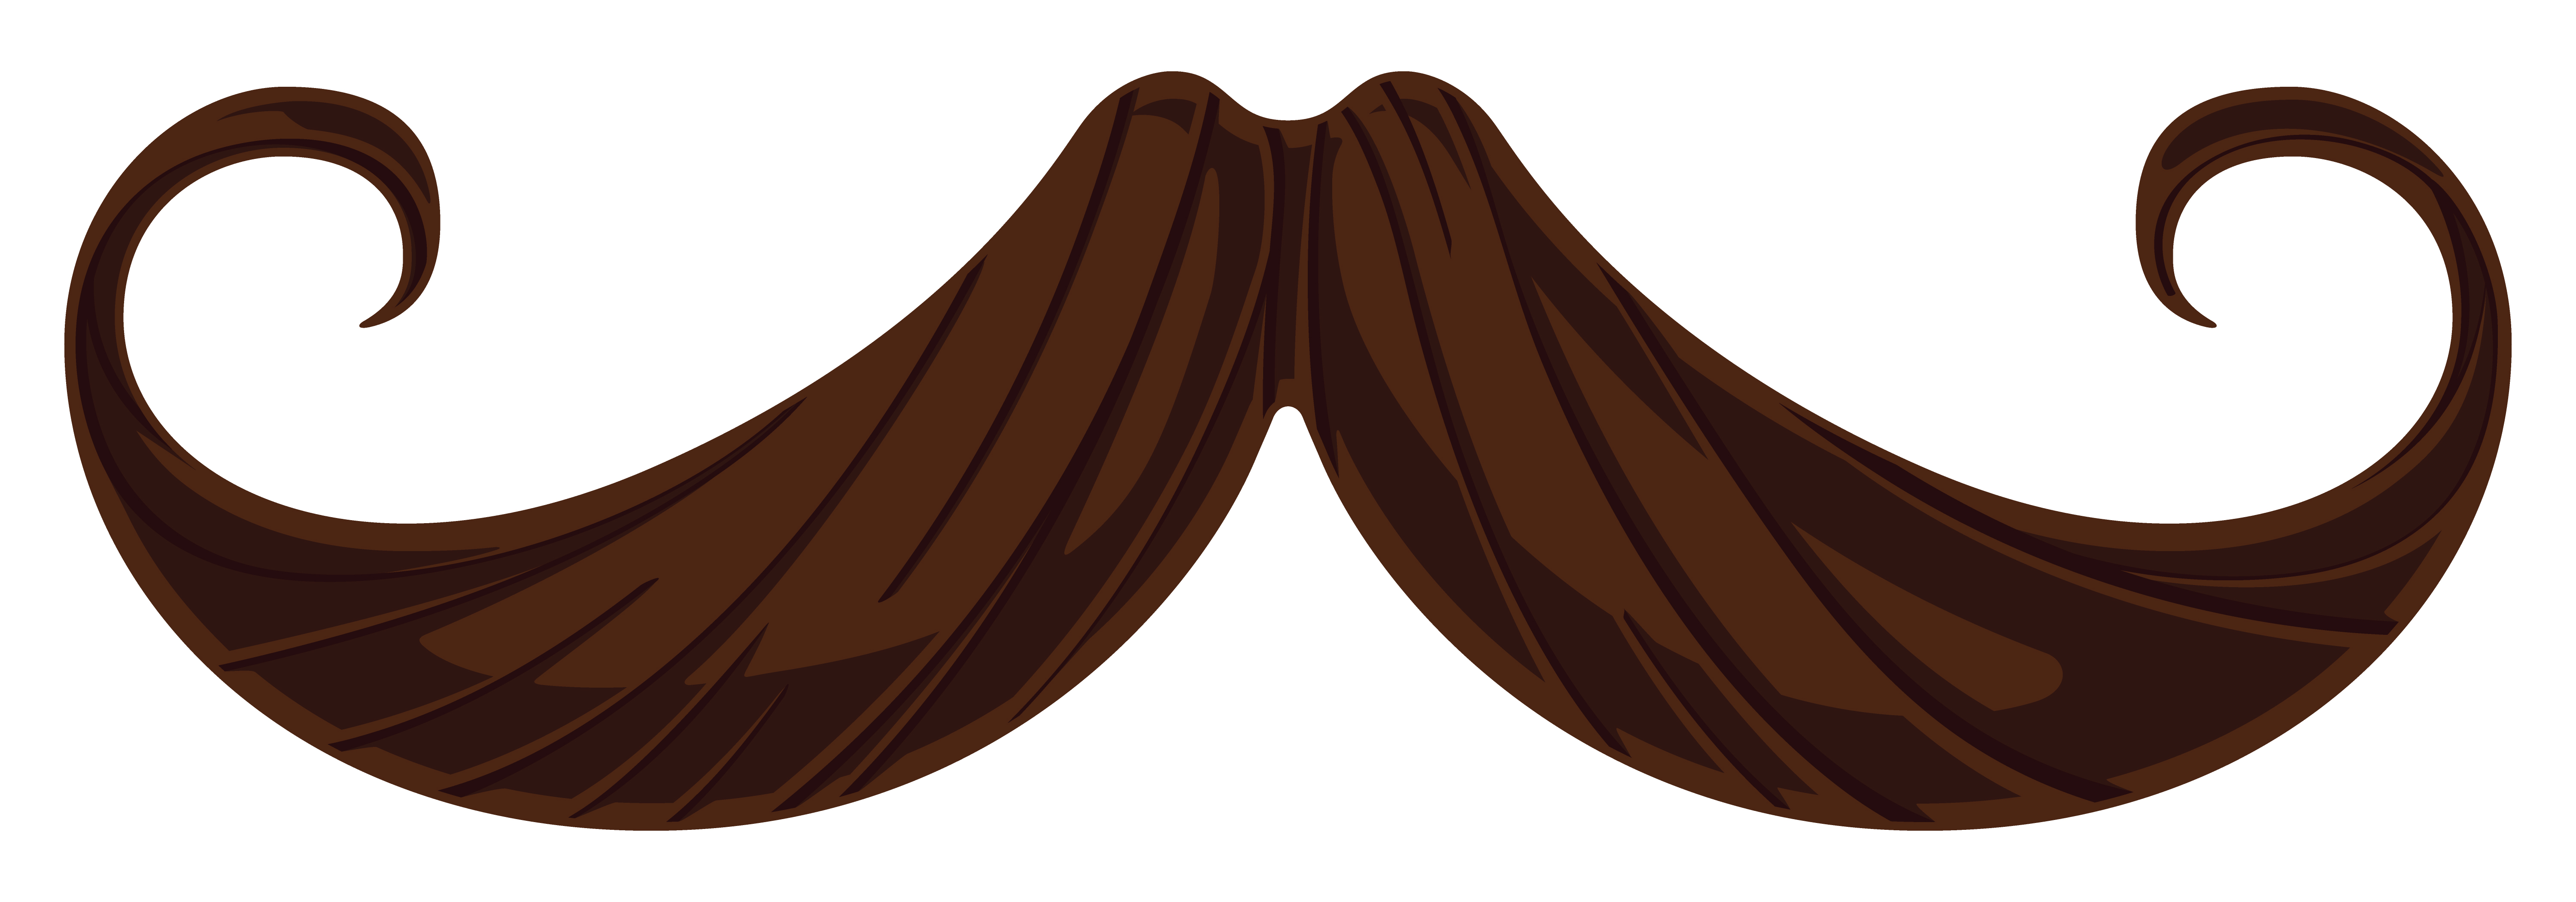 mustache clipart stock